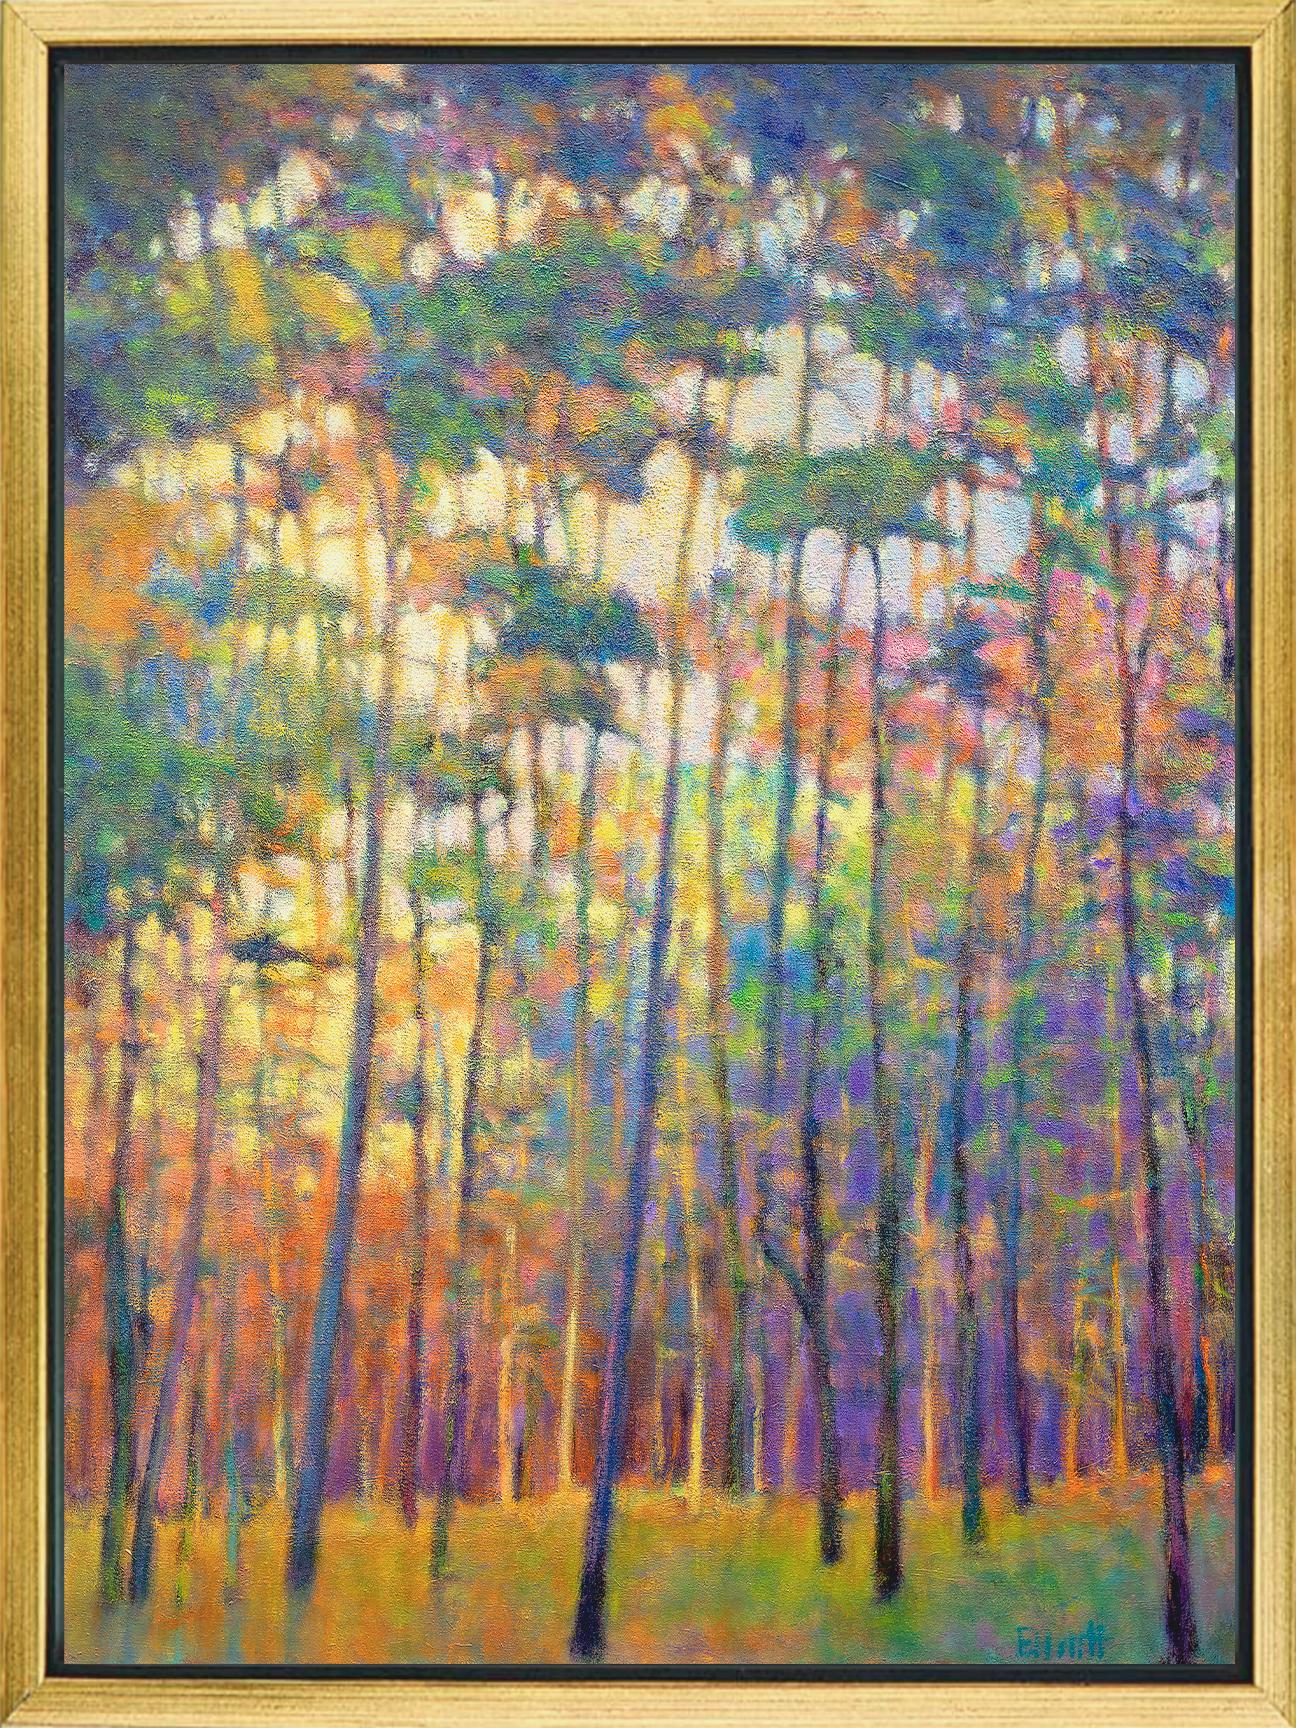 Ken Elliott Landscape Print - "Glittering Forest, " Framed Limited Edition Giclee Print, 24" x 18"